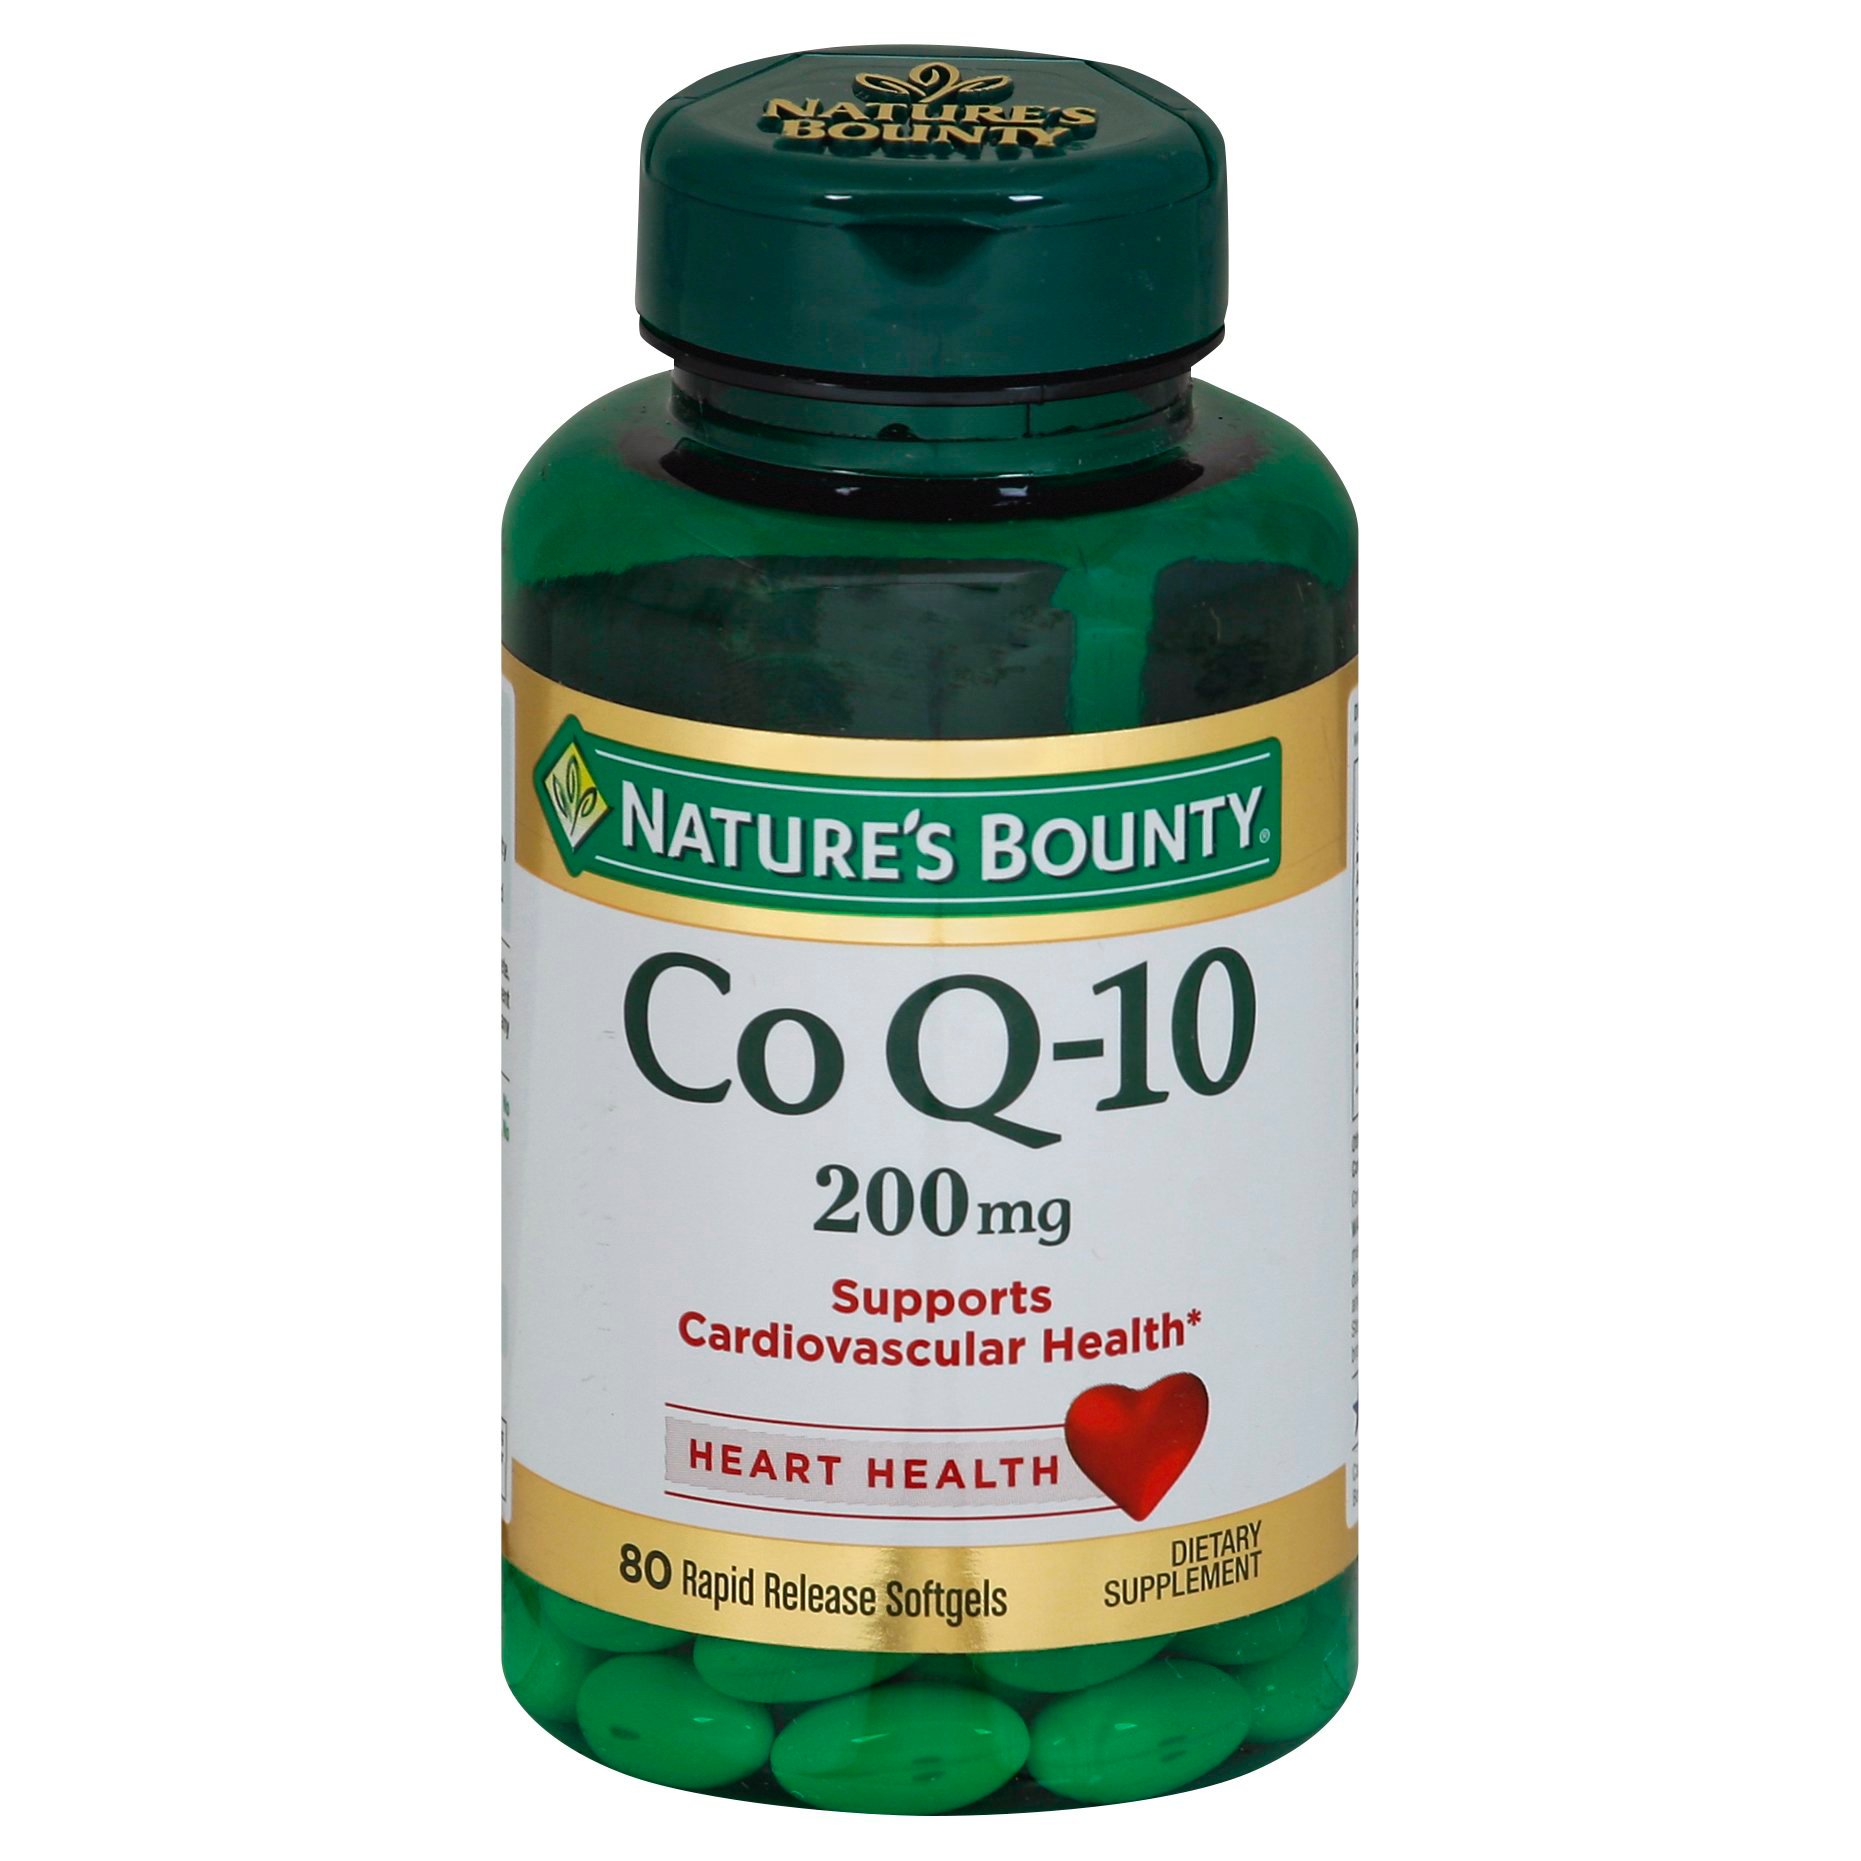 Nature's Bounty Co Q-10 200 Tablets - Shop Vitamins & Supplements at H-E-B